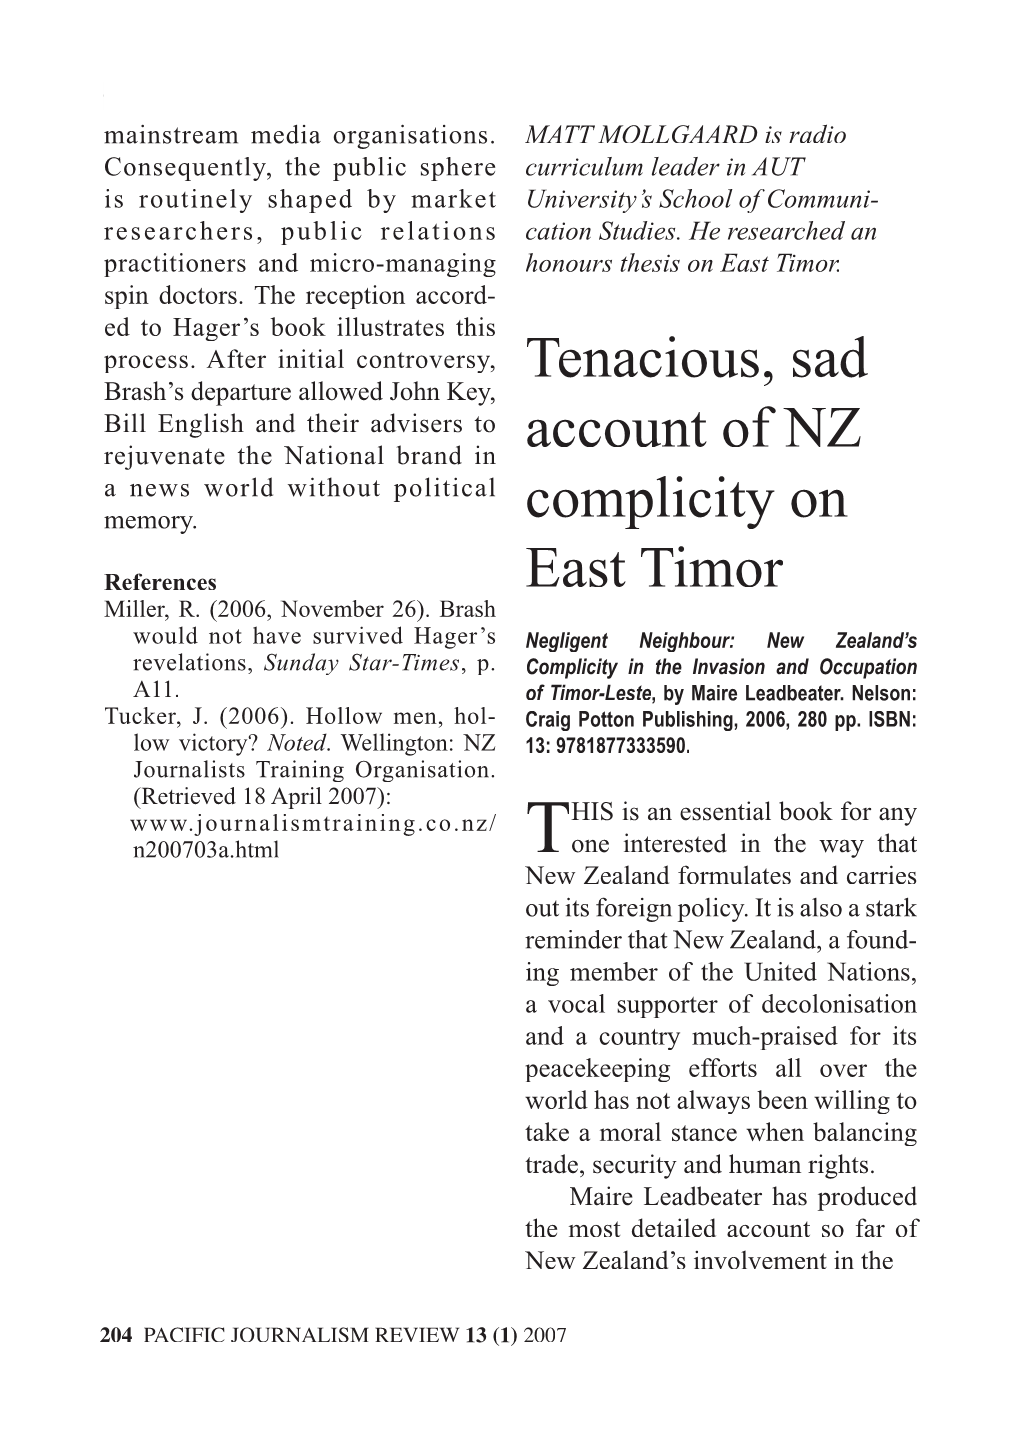 Tenacious, Sad Account of NZ Complicity on East Timor